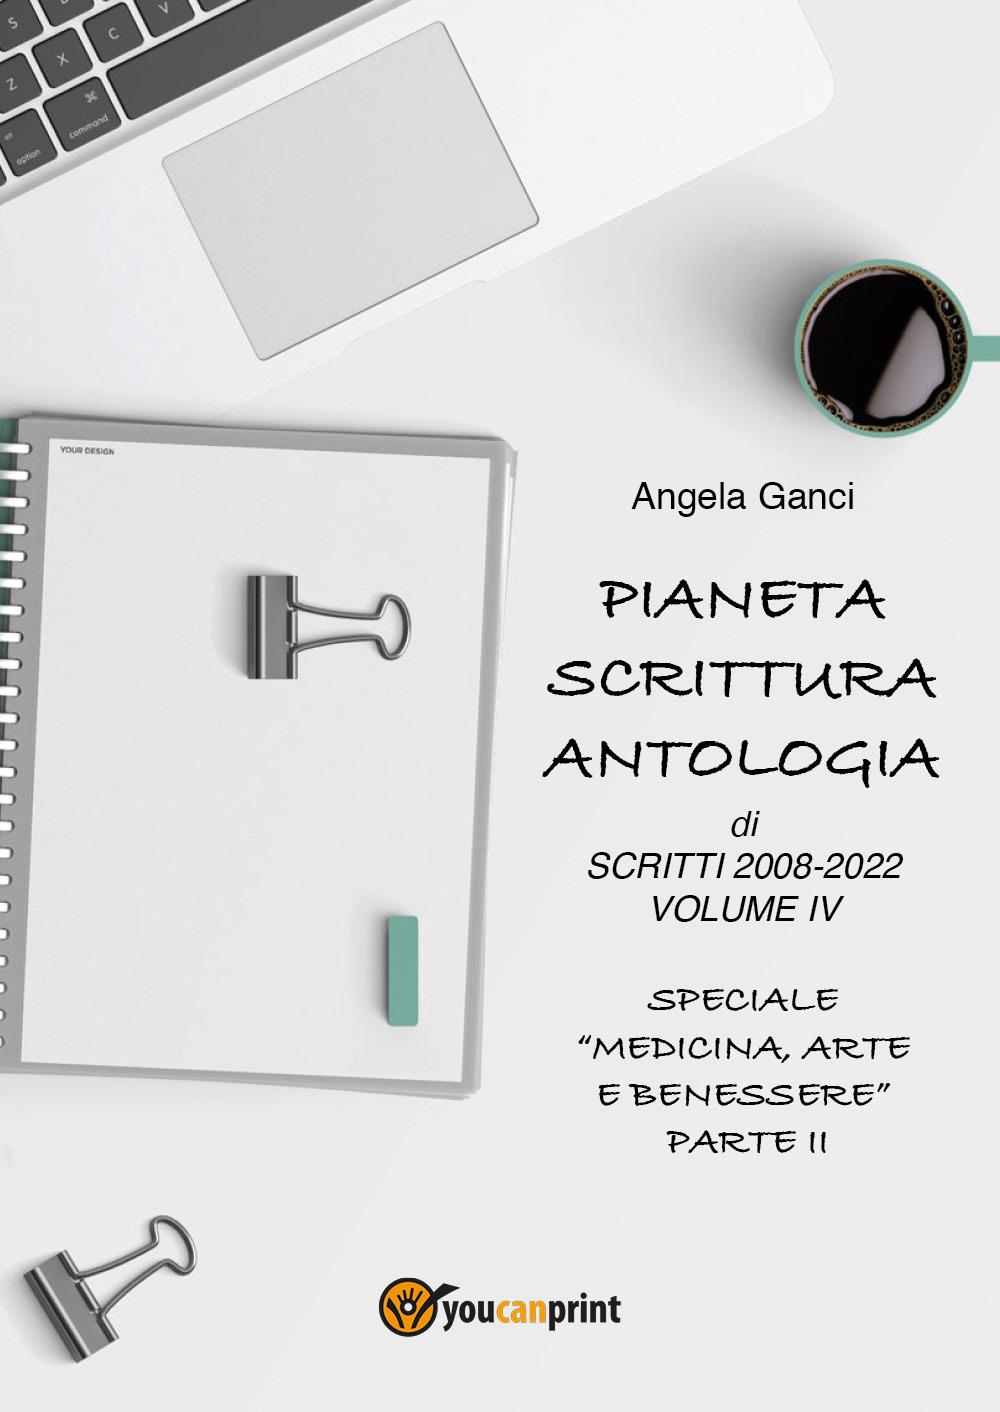 Pianeta Scrittura.  Antologia di scritti 2008-2022 Volume IV  Speciale "Medicina, Arte e Benessere" - Parte II